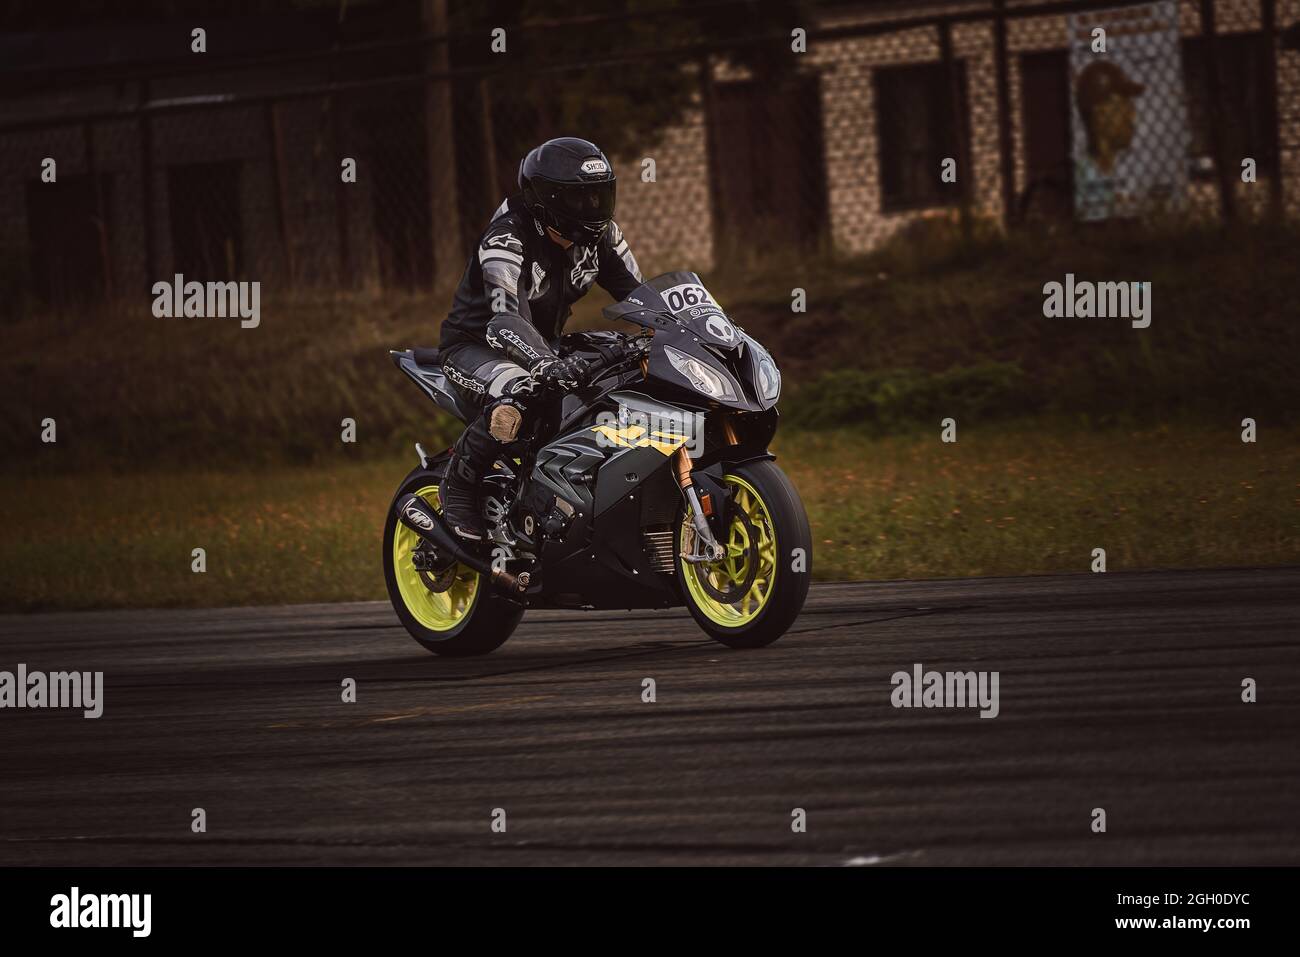 10-05-2021 Lithuania, Kaunas MotoGP rider, Motorcyclist rides at fast sport bike. Stock Photo